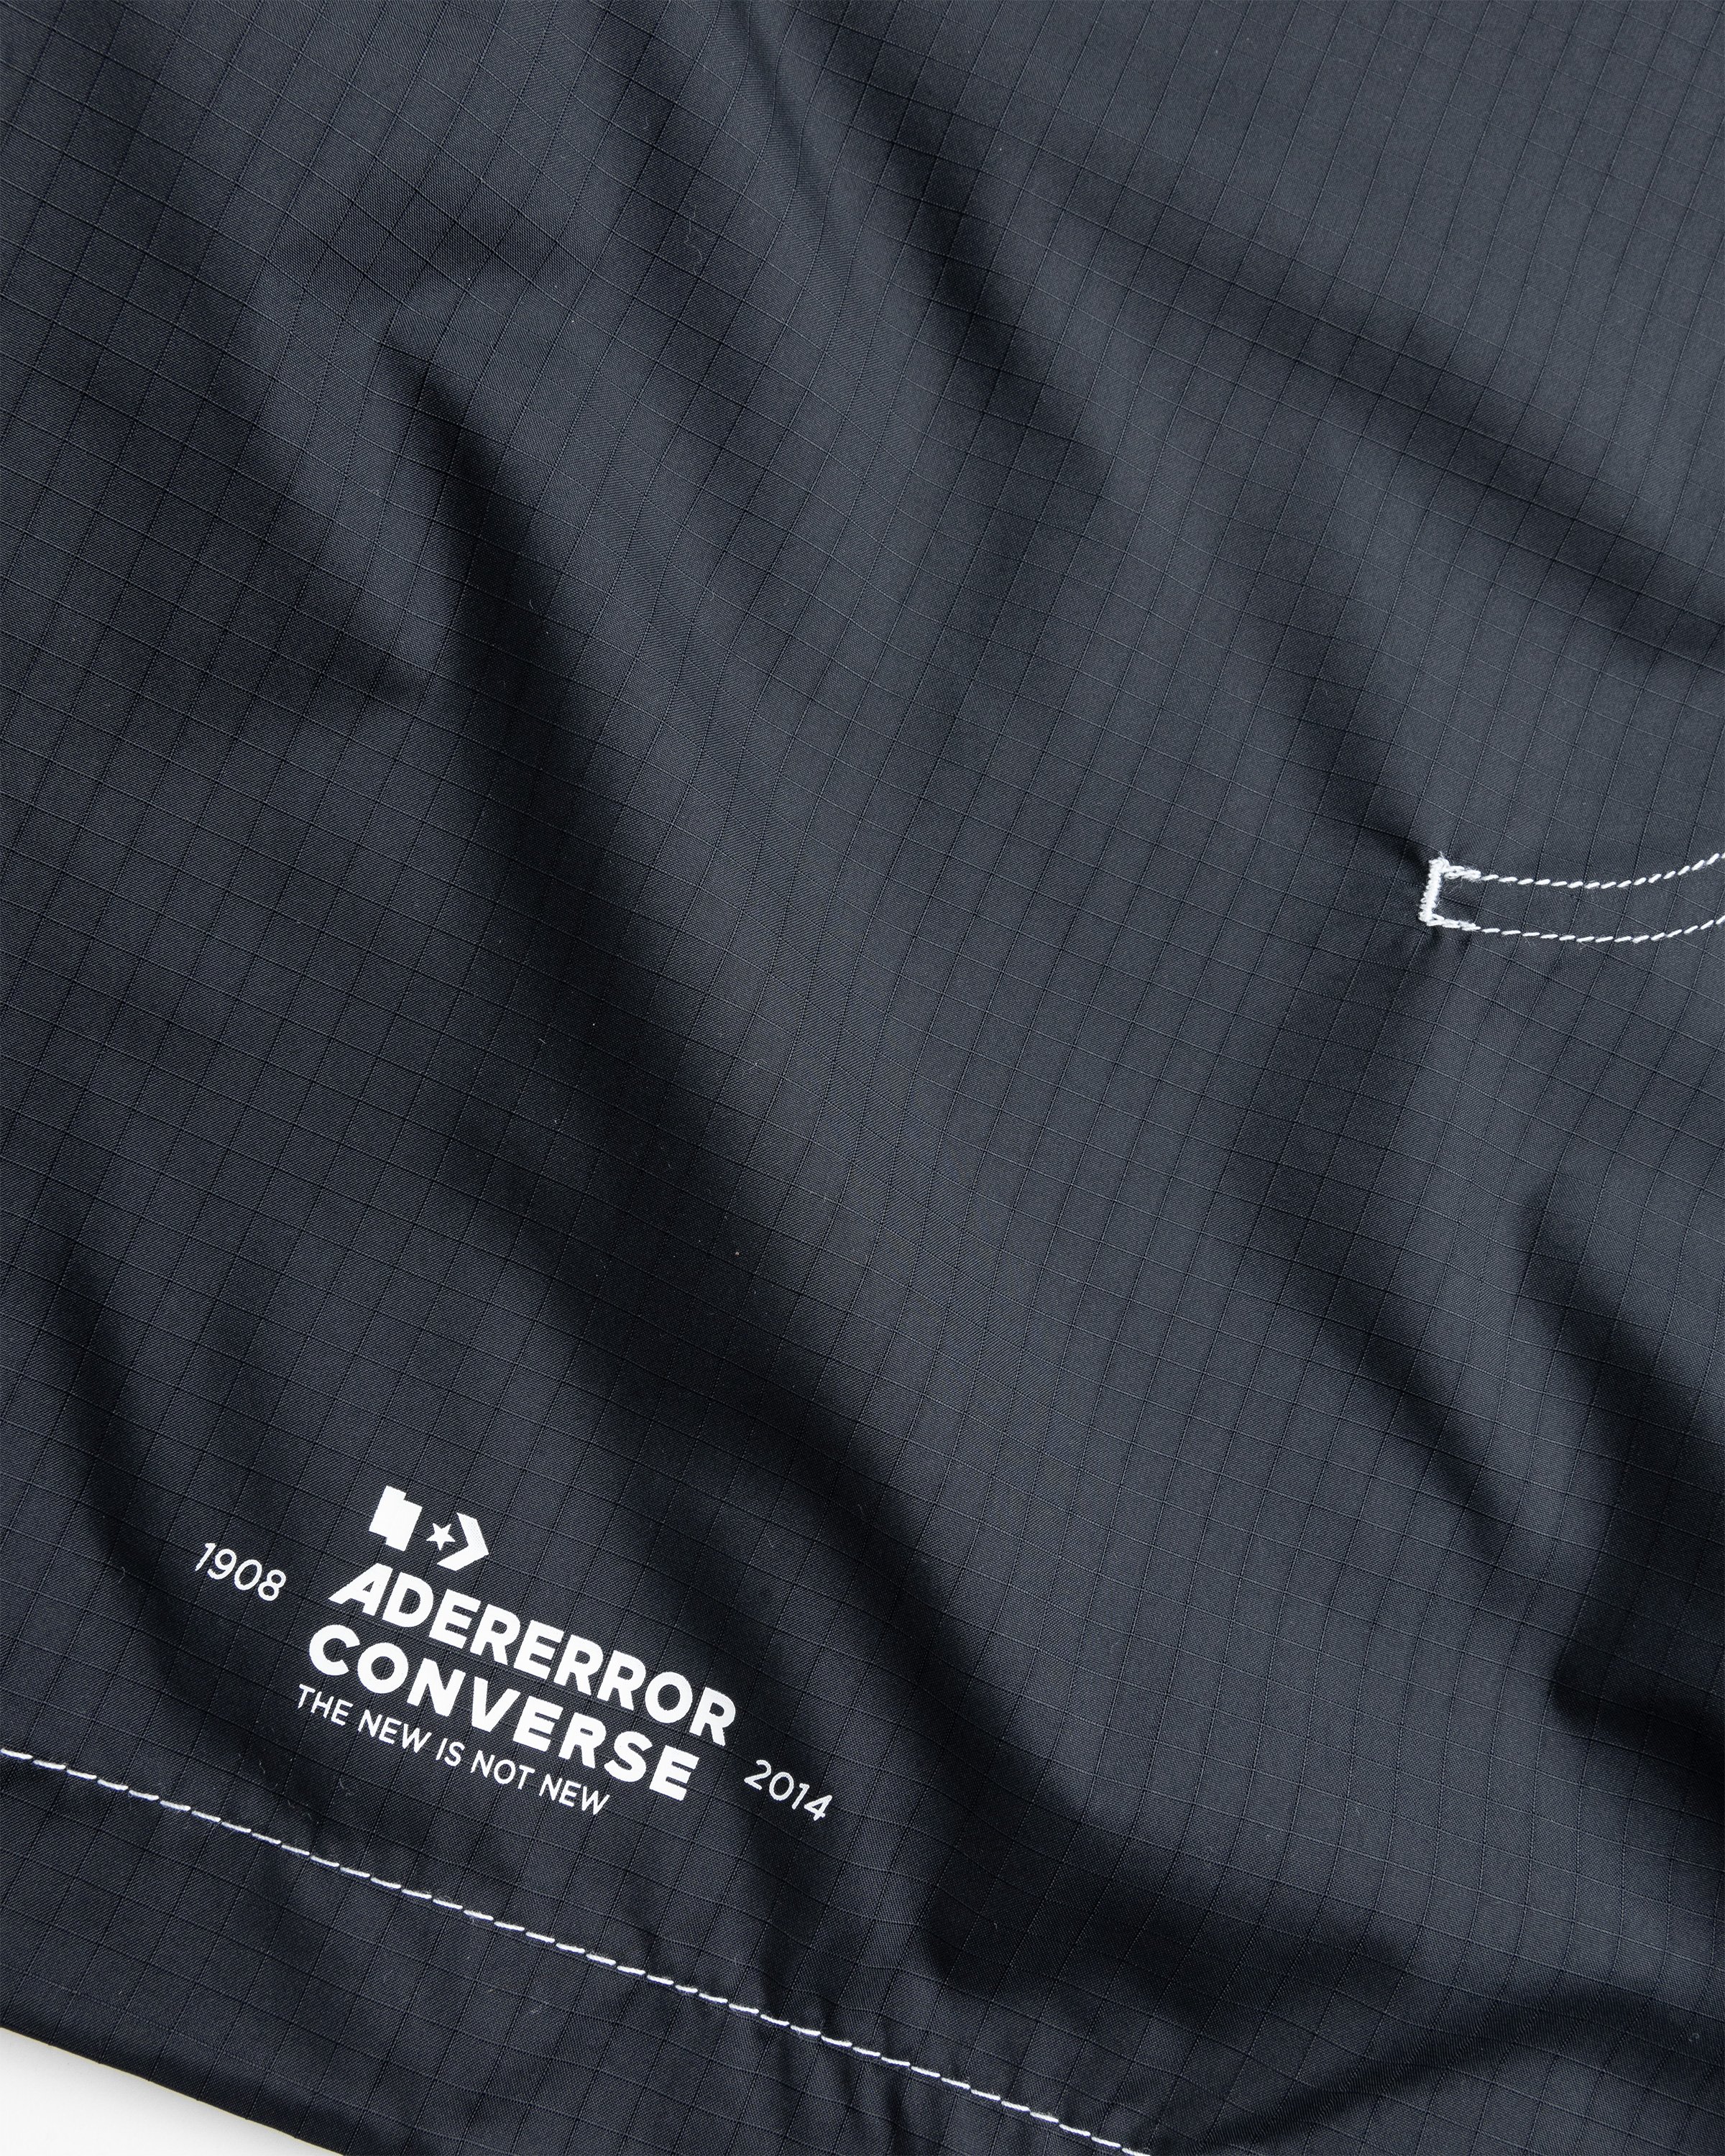 Converse x Ader Error - Shapes Shorts Converse Black - Clothing - Black - Image 6